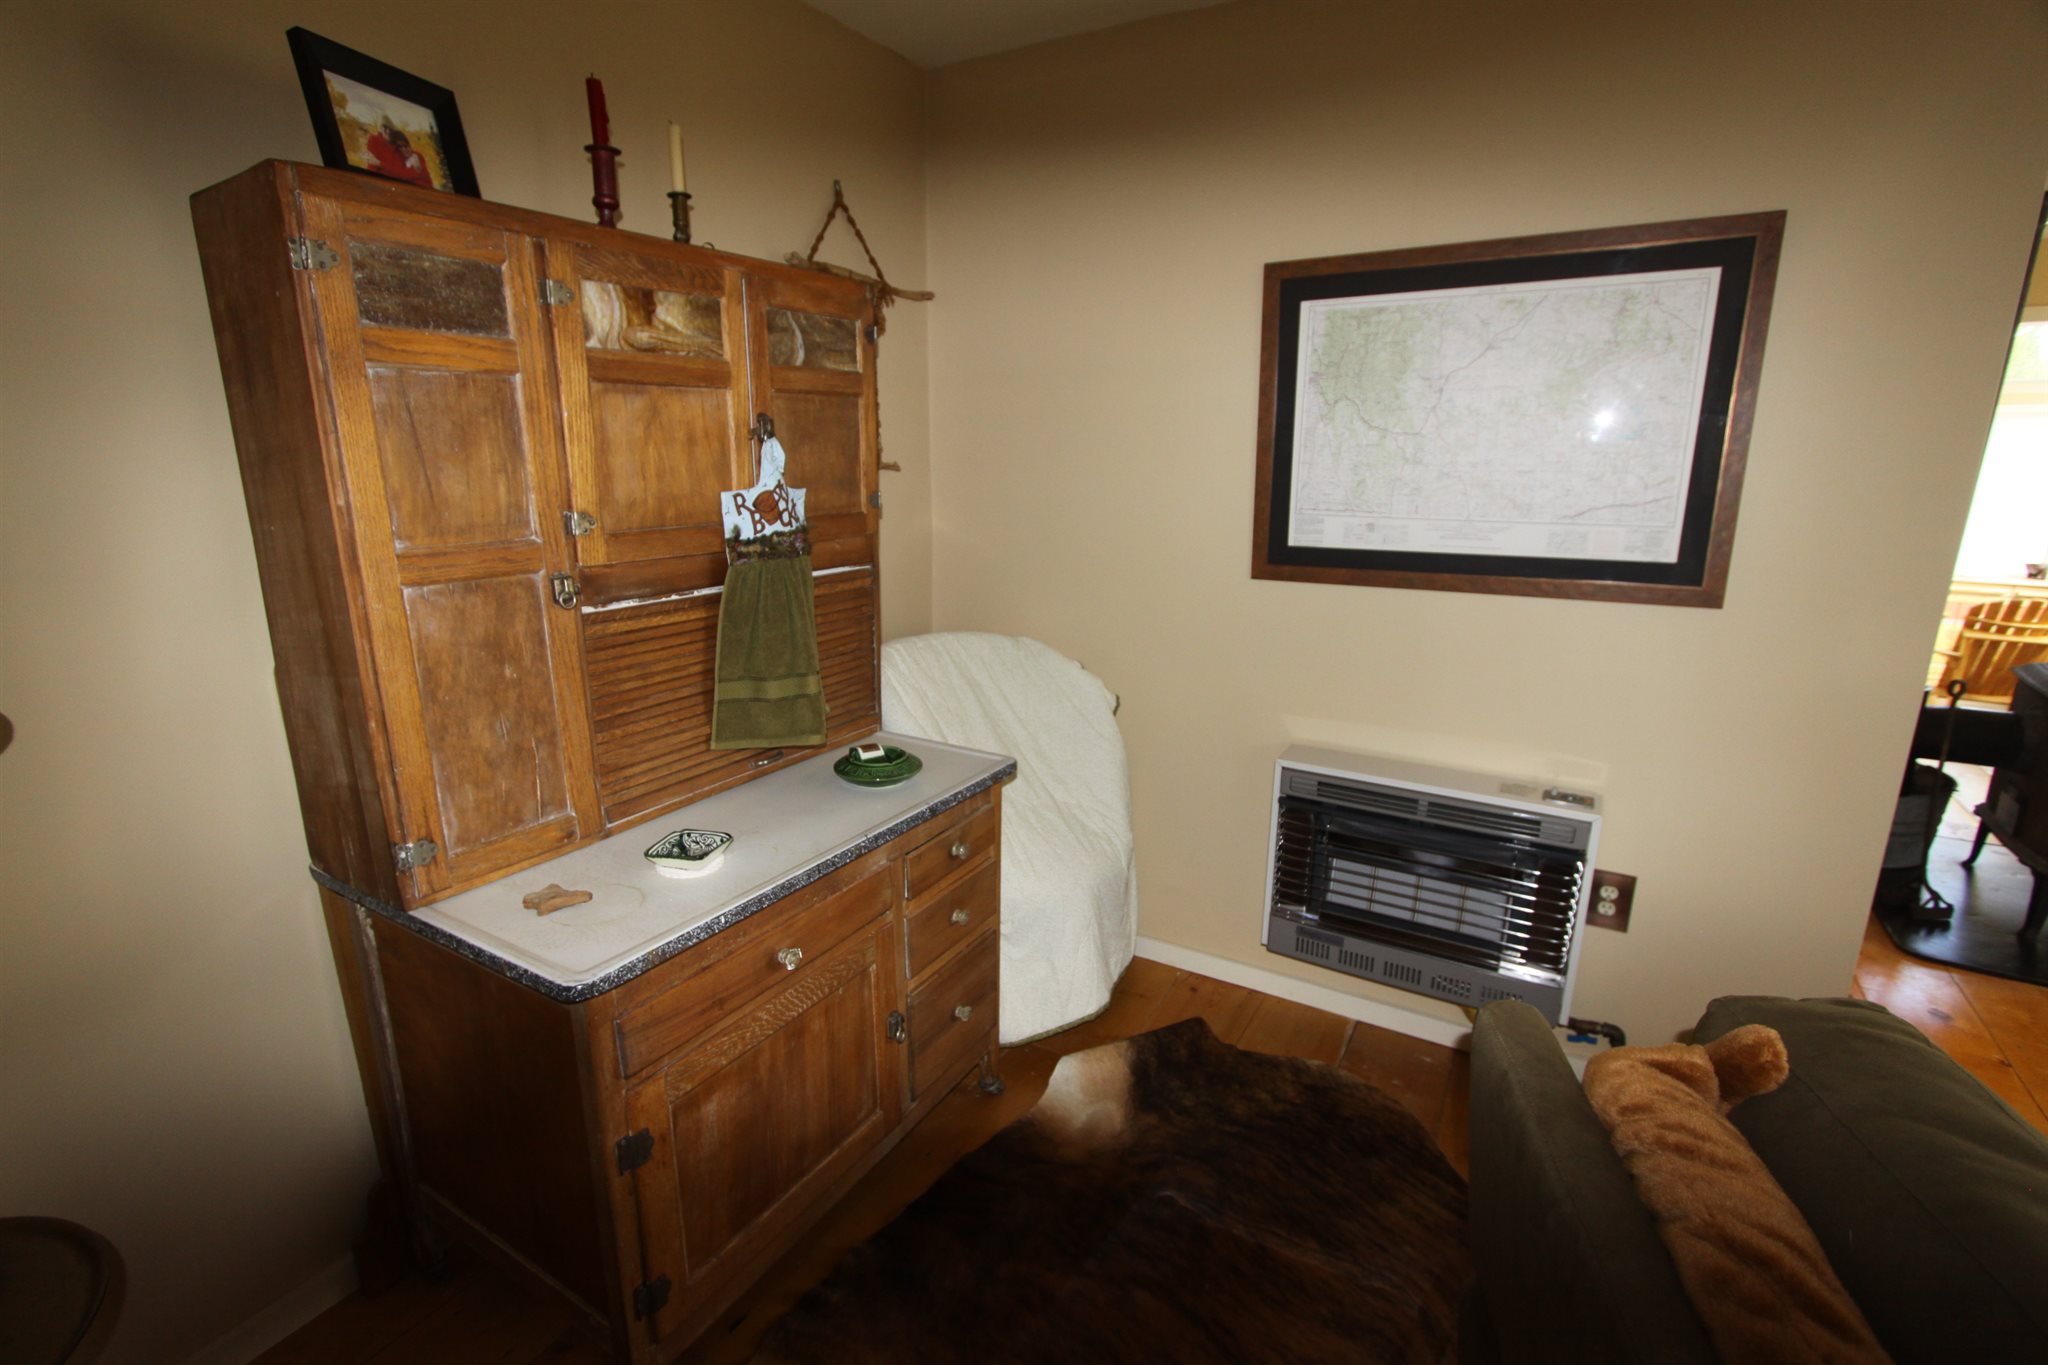 613 Apache Mesa, Las Vegas, New Mexico 87701, 2 Bedrooms Bedrooms, ,1 BathroomBathrooms,Farm,For Sale,613 Apache Mesa,202000716